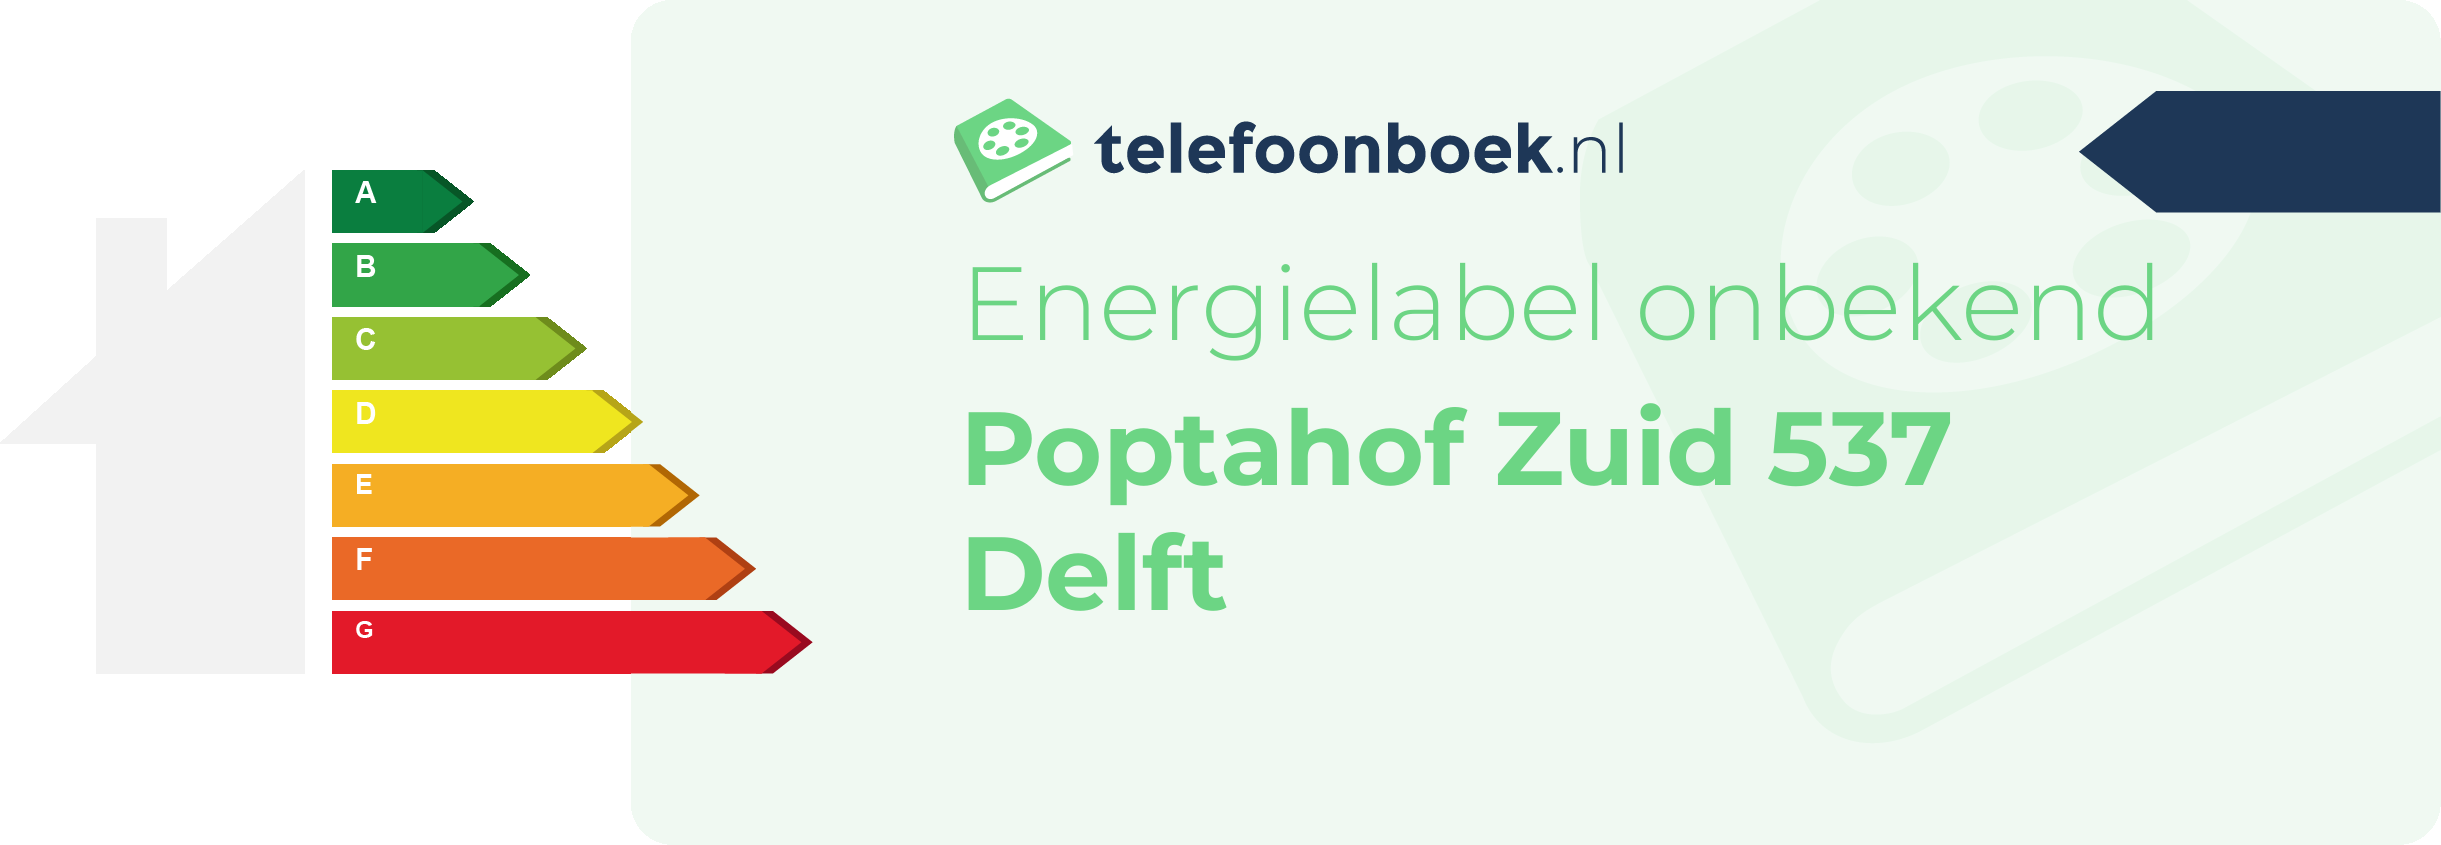 Energielabel Poptahof Zuid 537 Delft